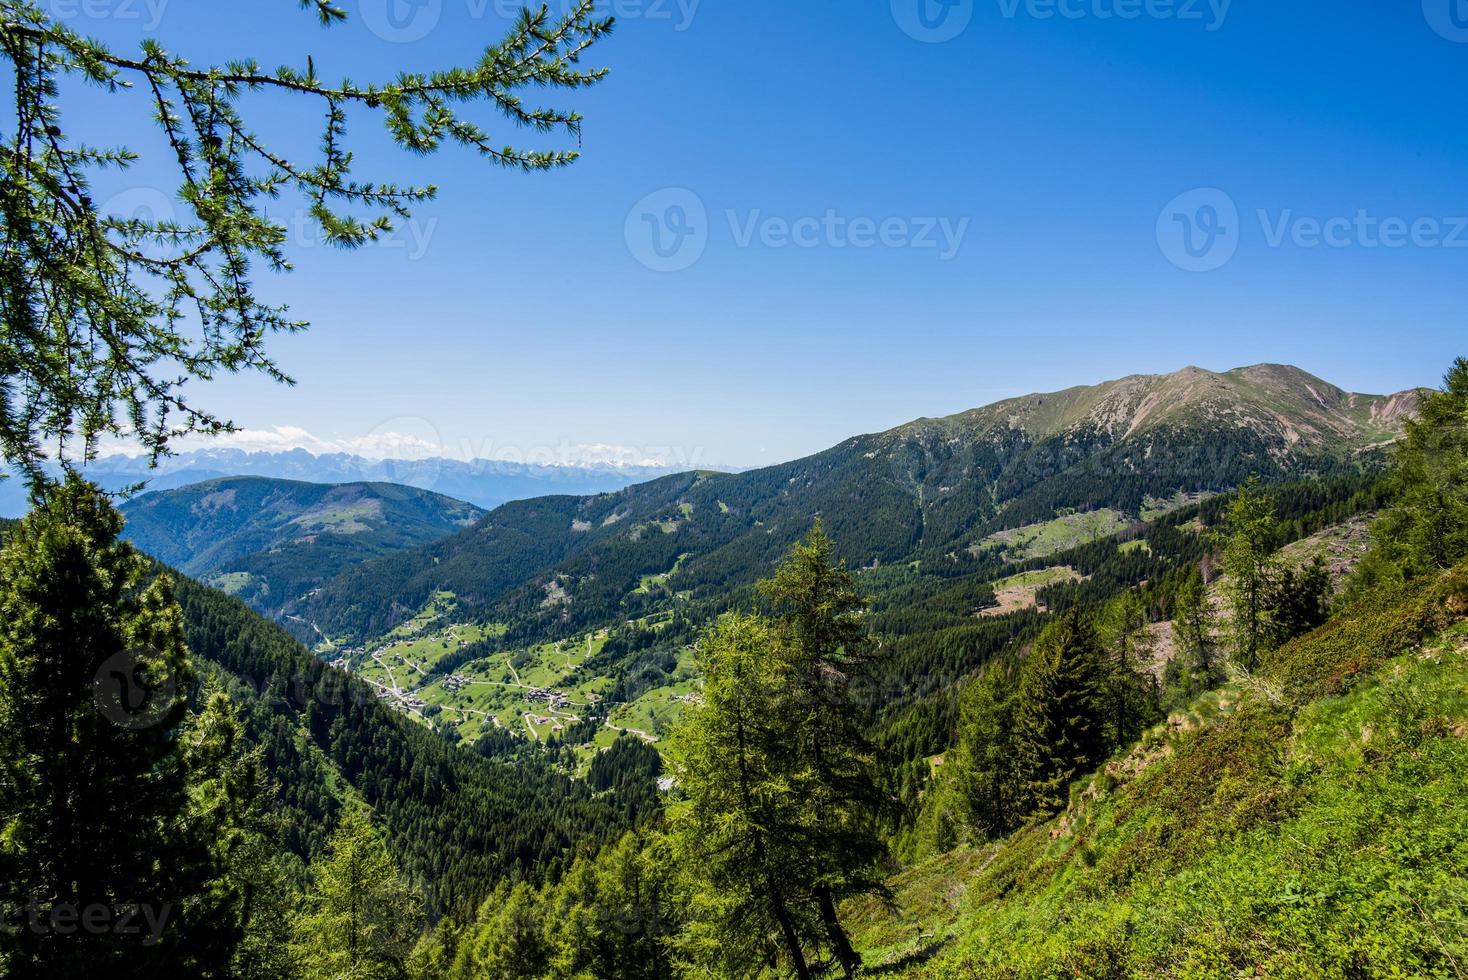 2022 06 11 lagorai vales alpinos na floresta foto